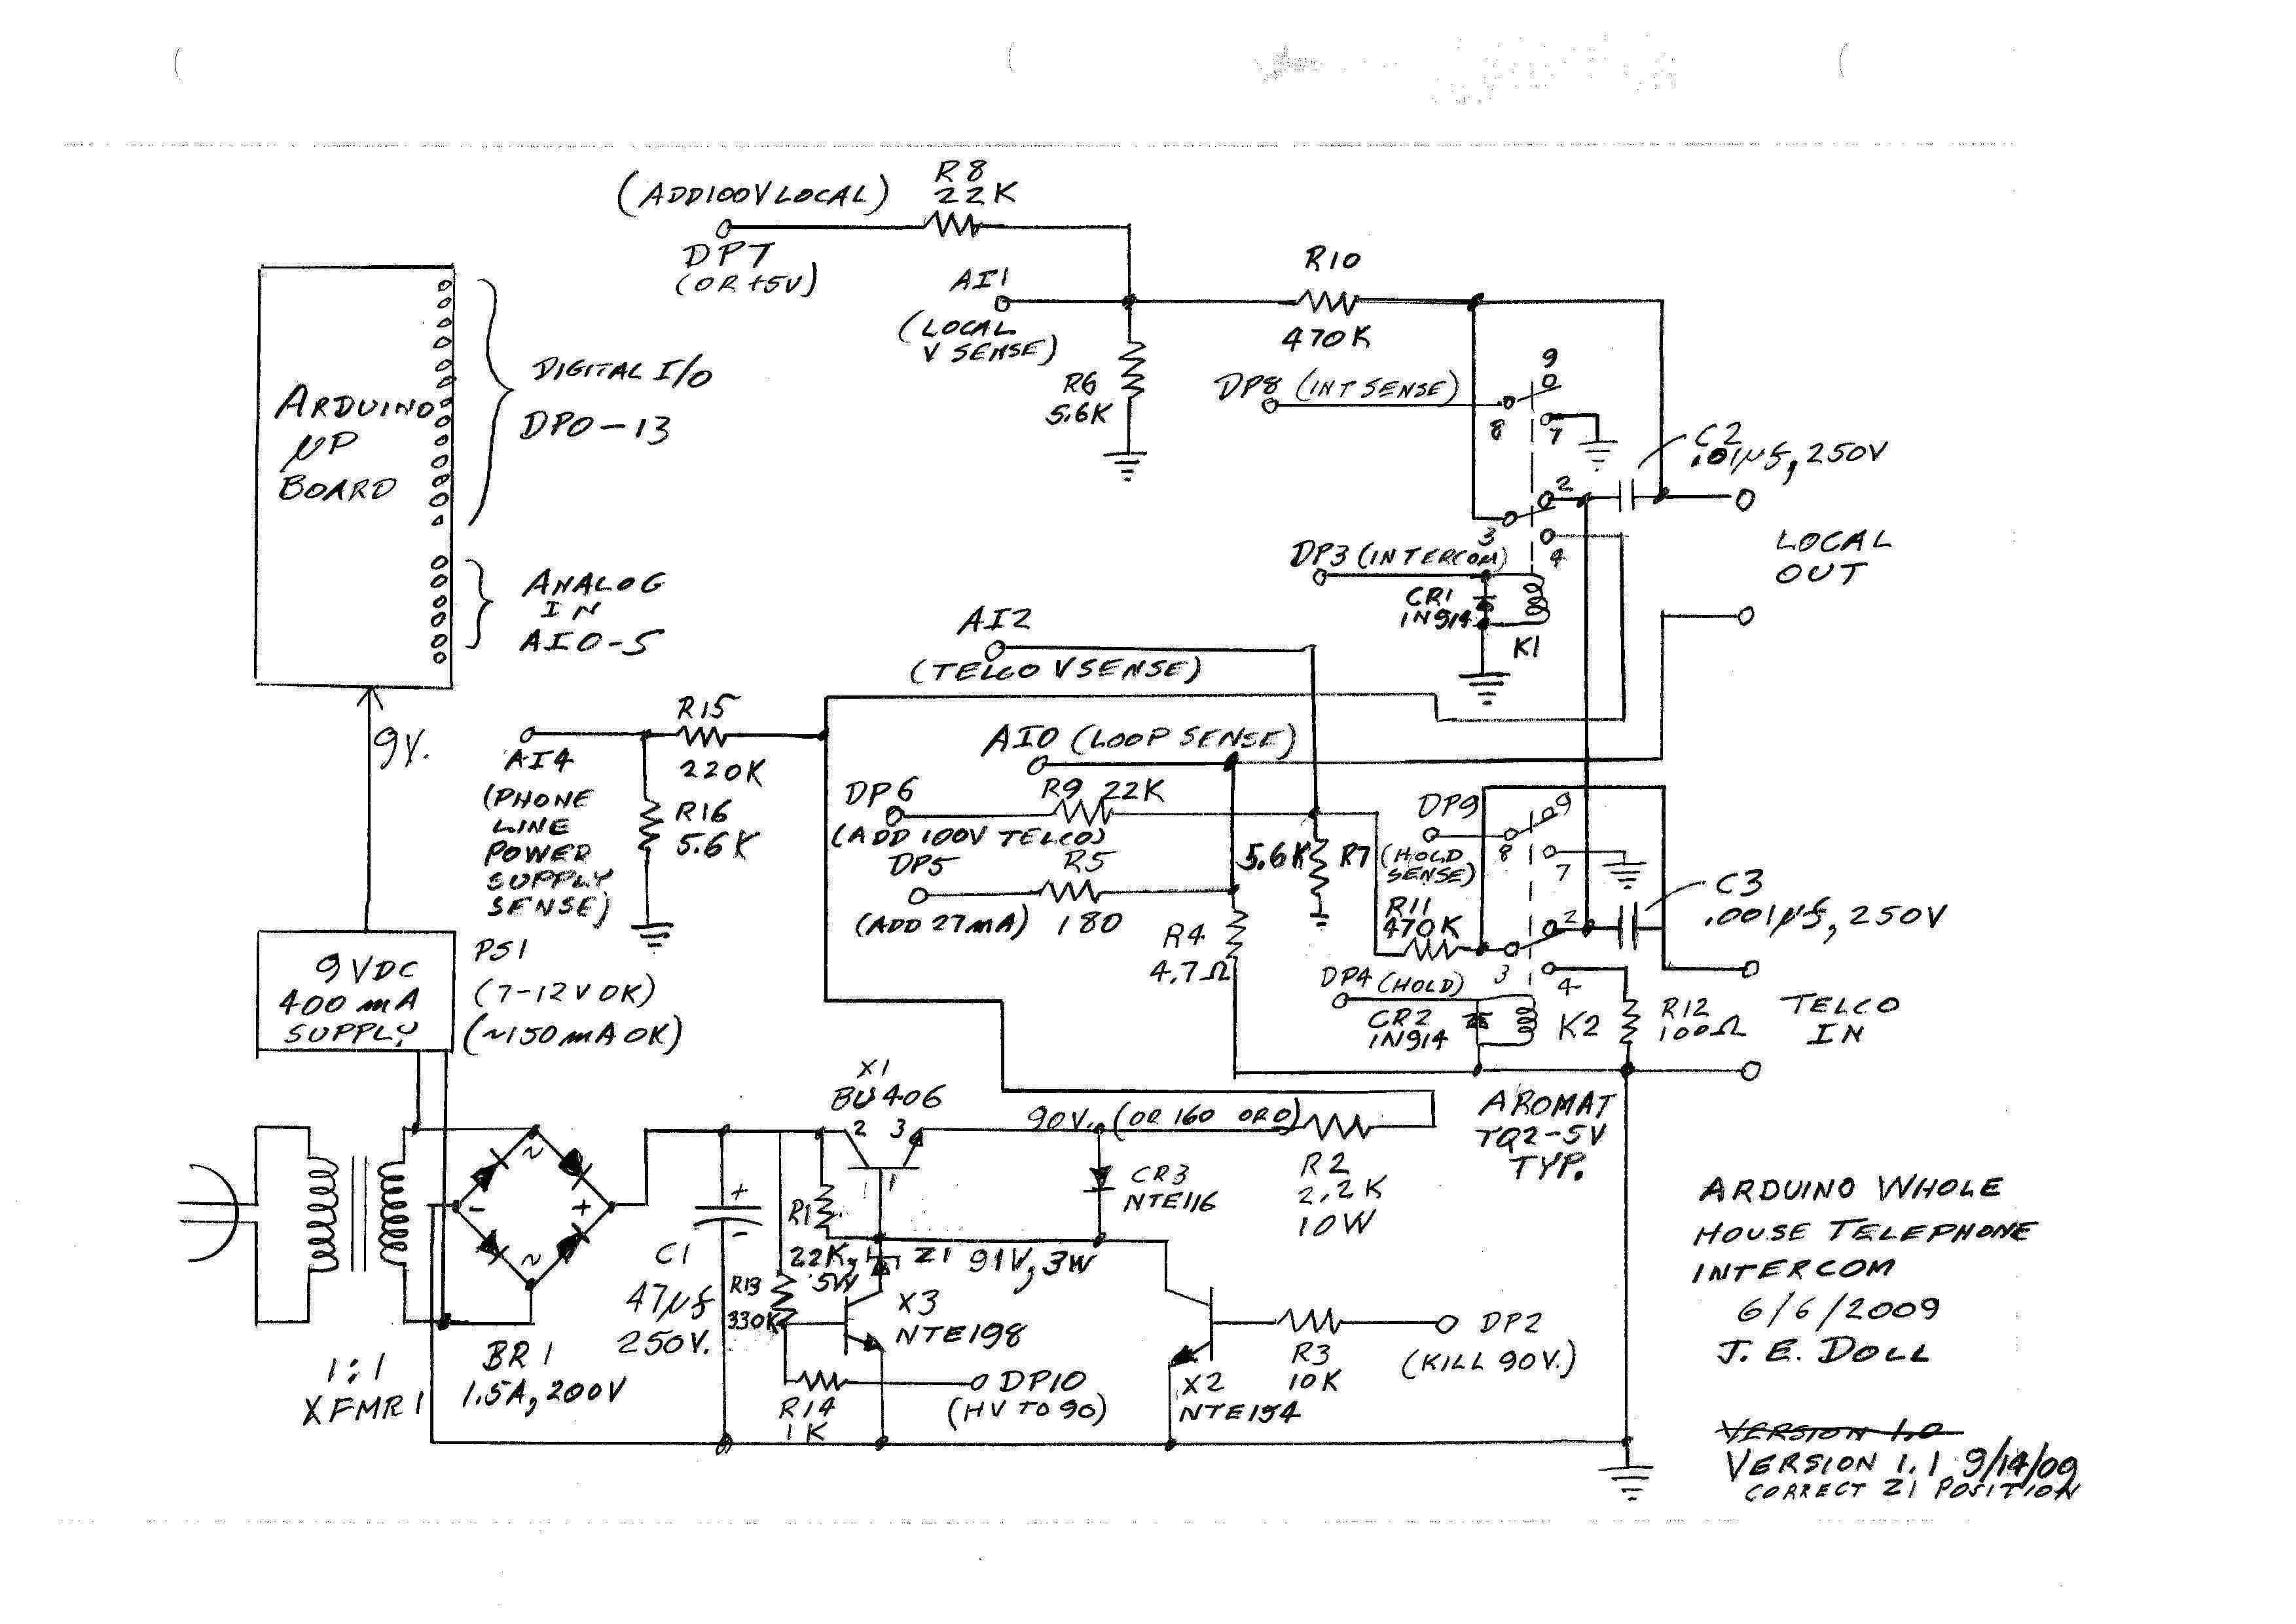 tec-12-18 kss3 wiring diagram pdf